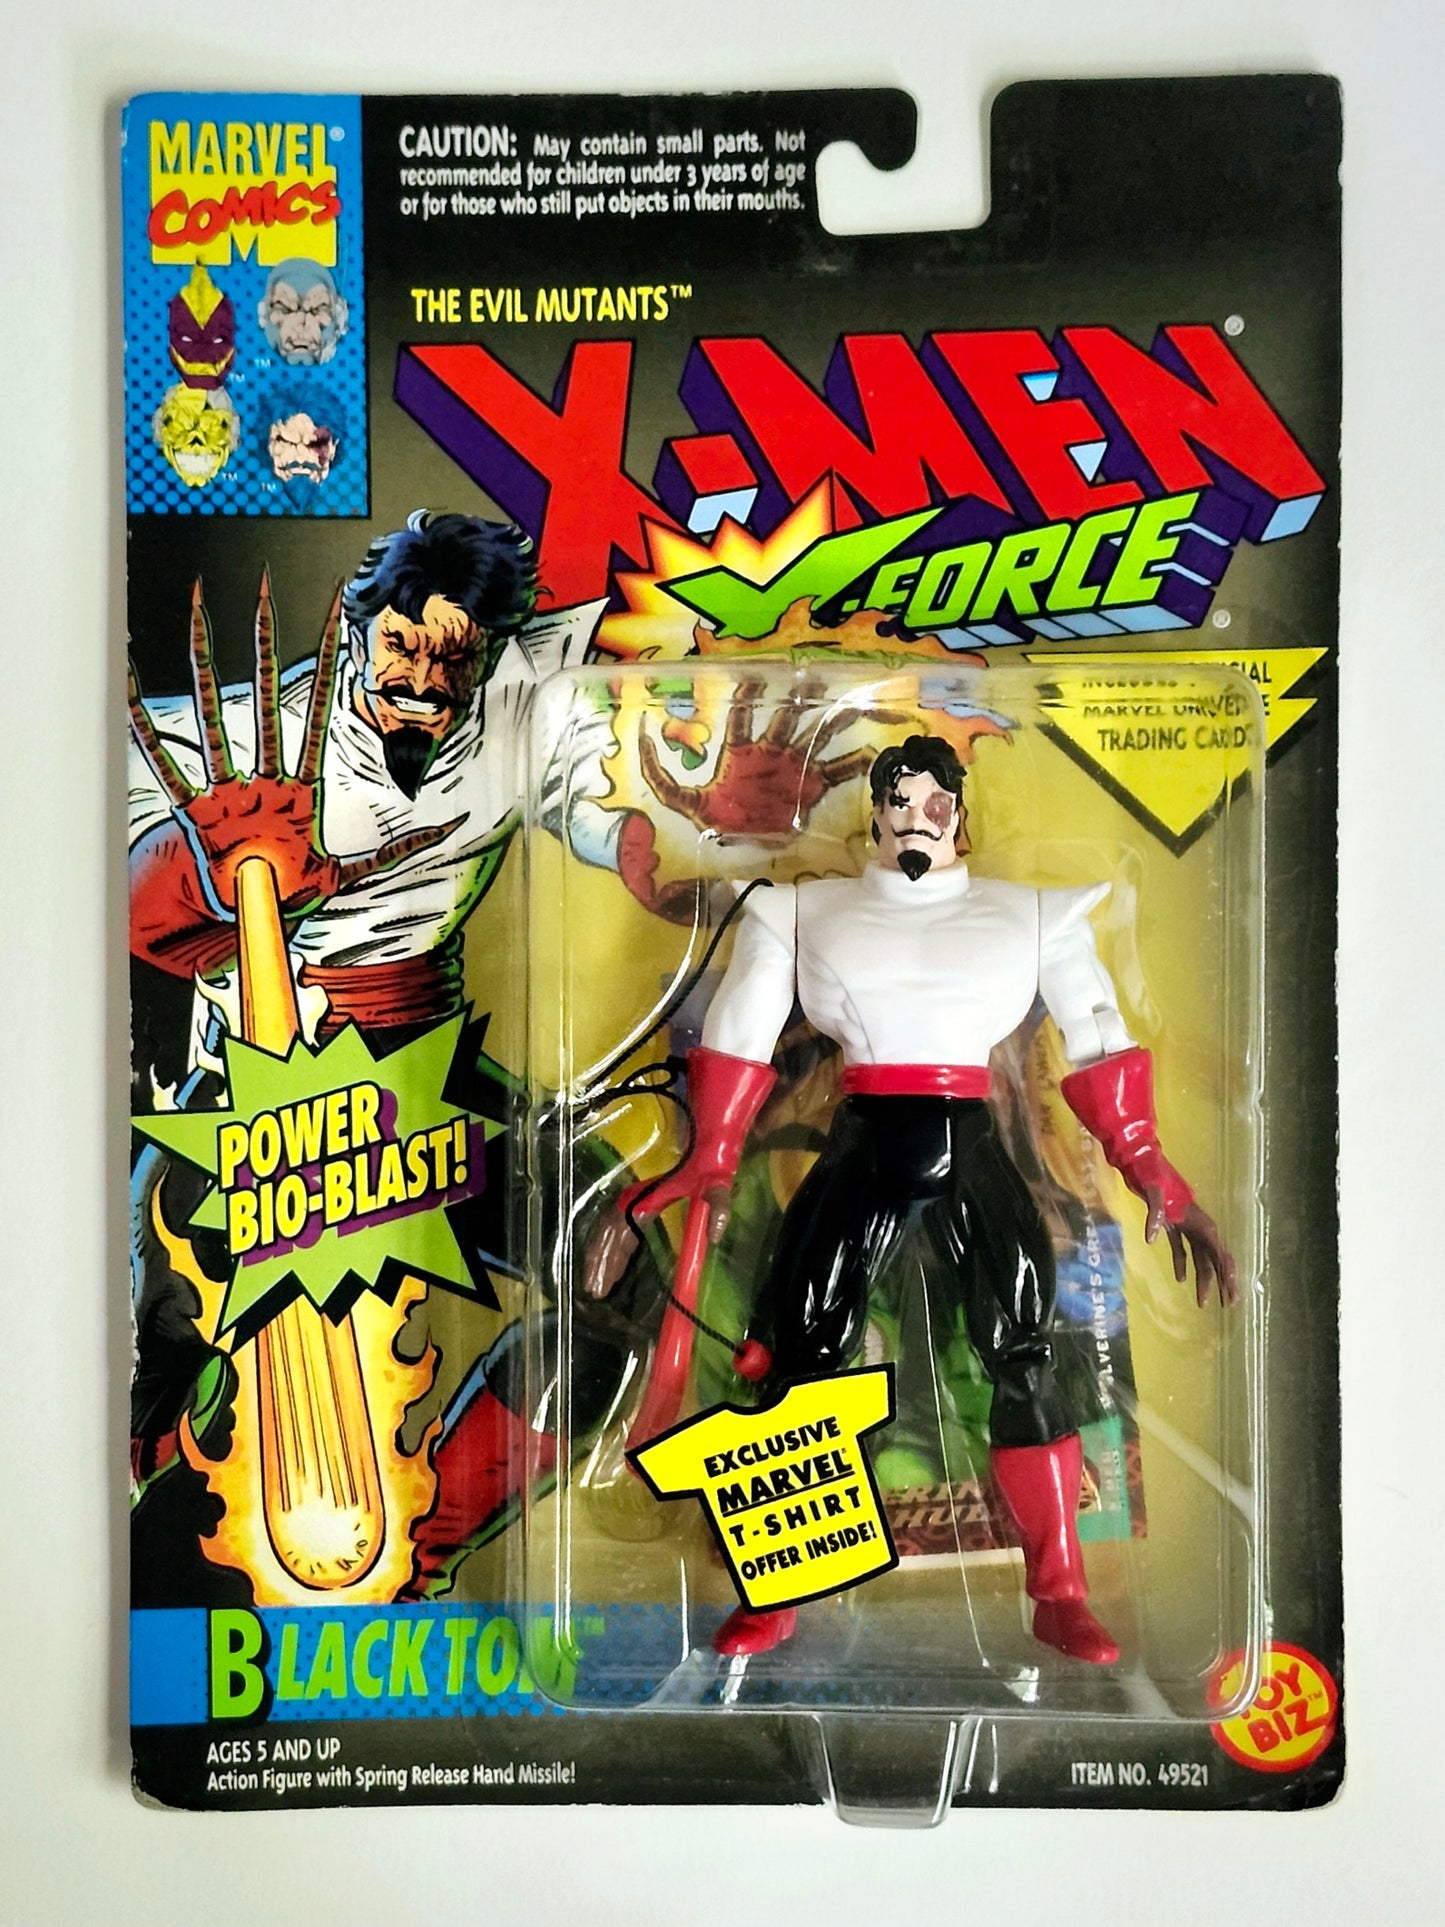 X-Men/X-Force Black Tom Action Figure